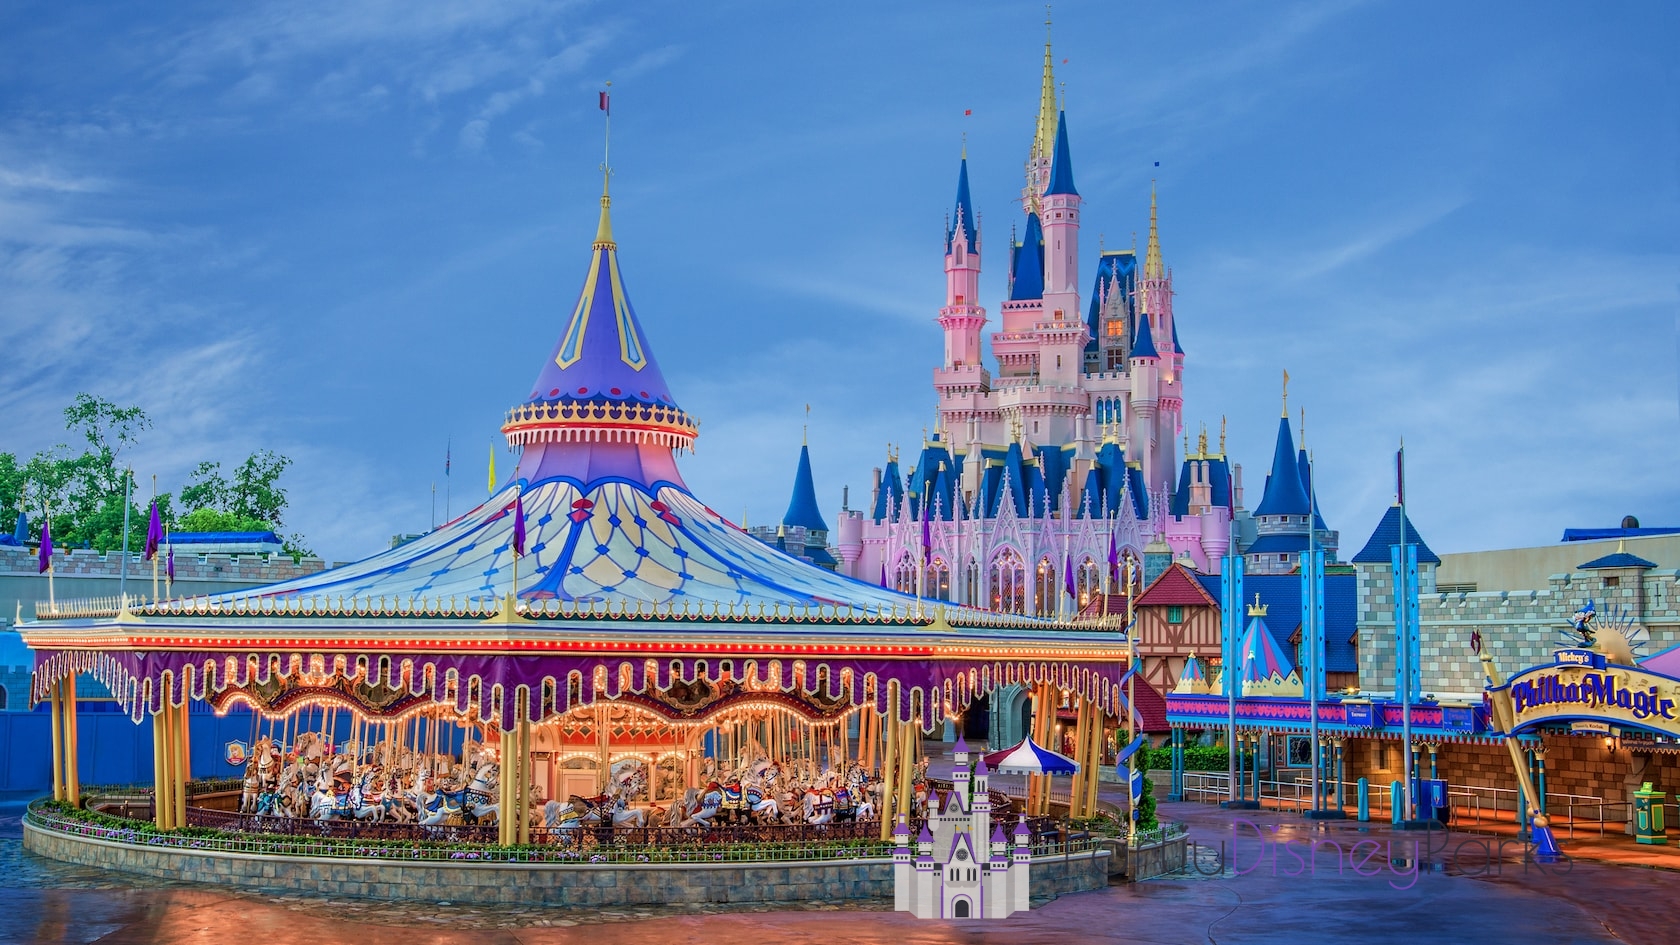 Fantasyland - Prince Charming Regal Carrousel